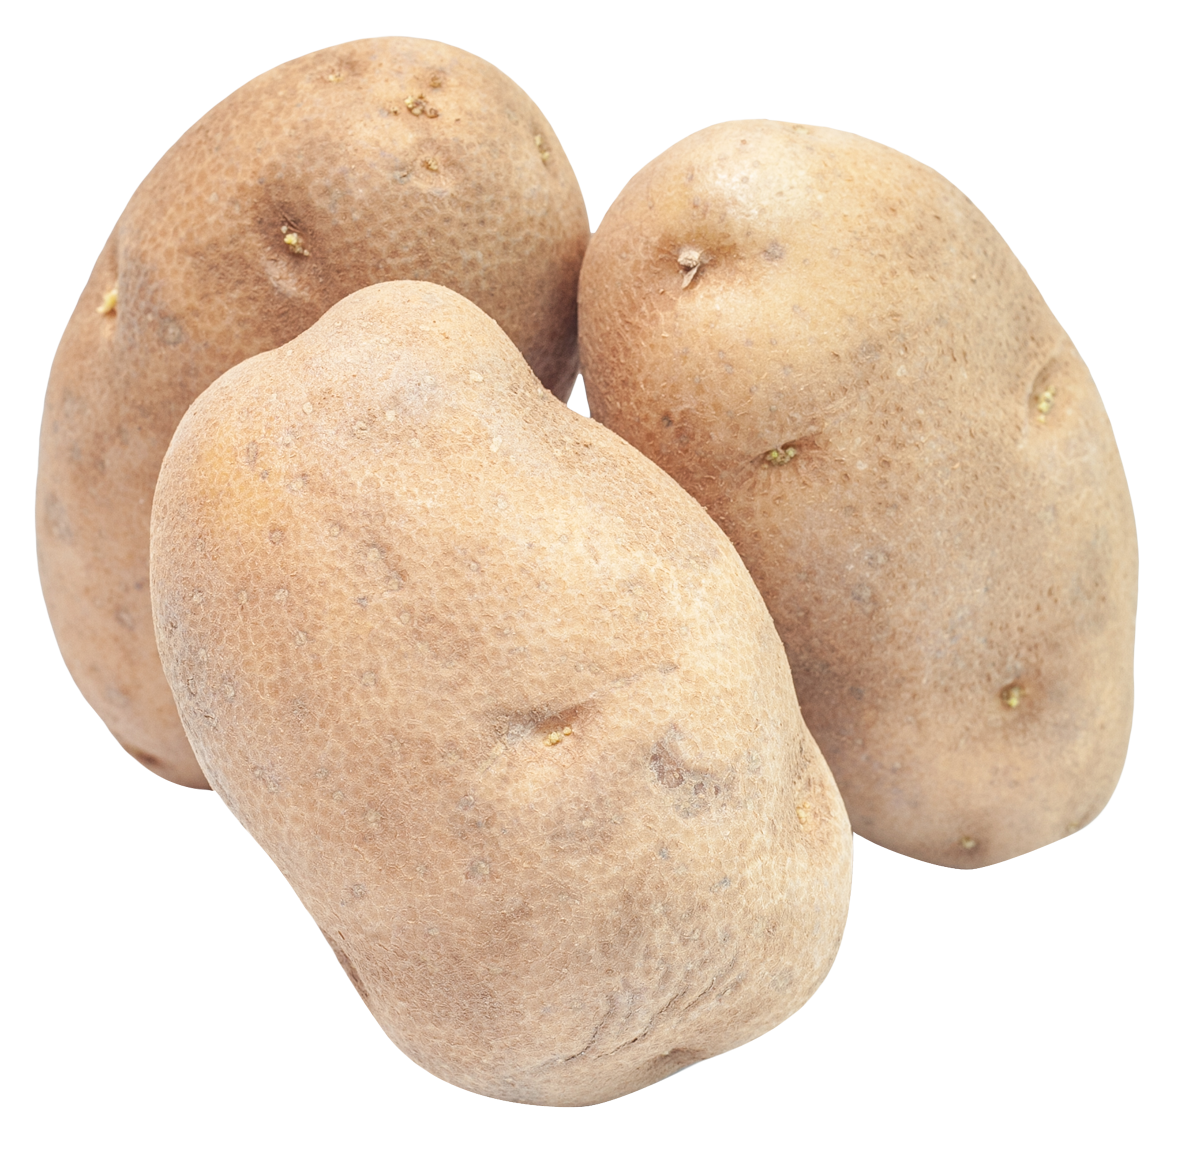 Three Potato Pieces